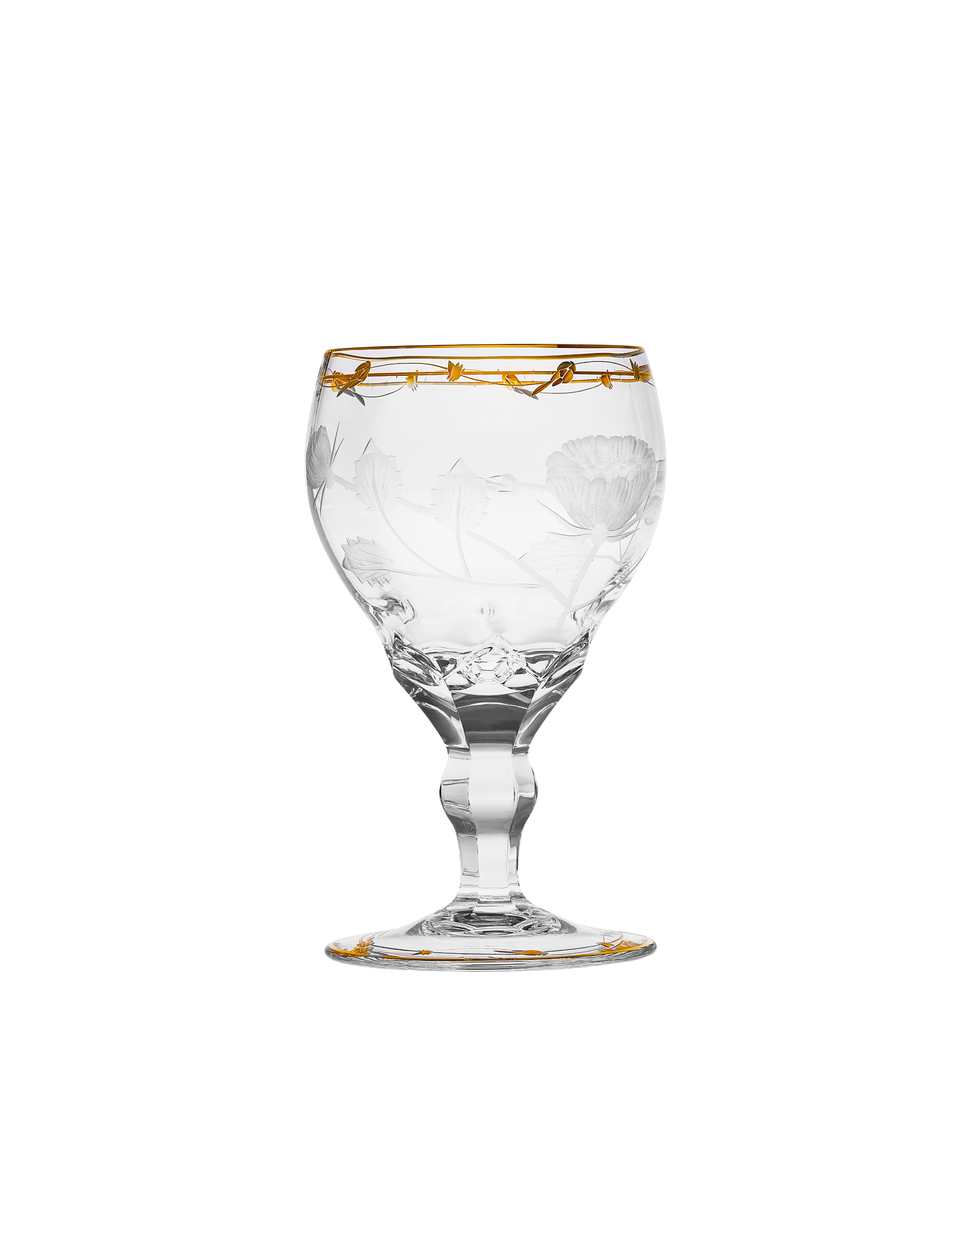 Paula brandy glass, 320 ml